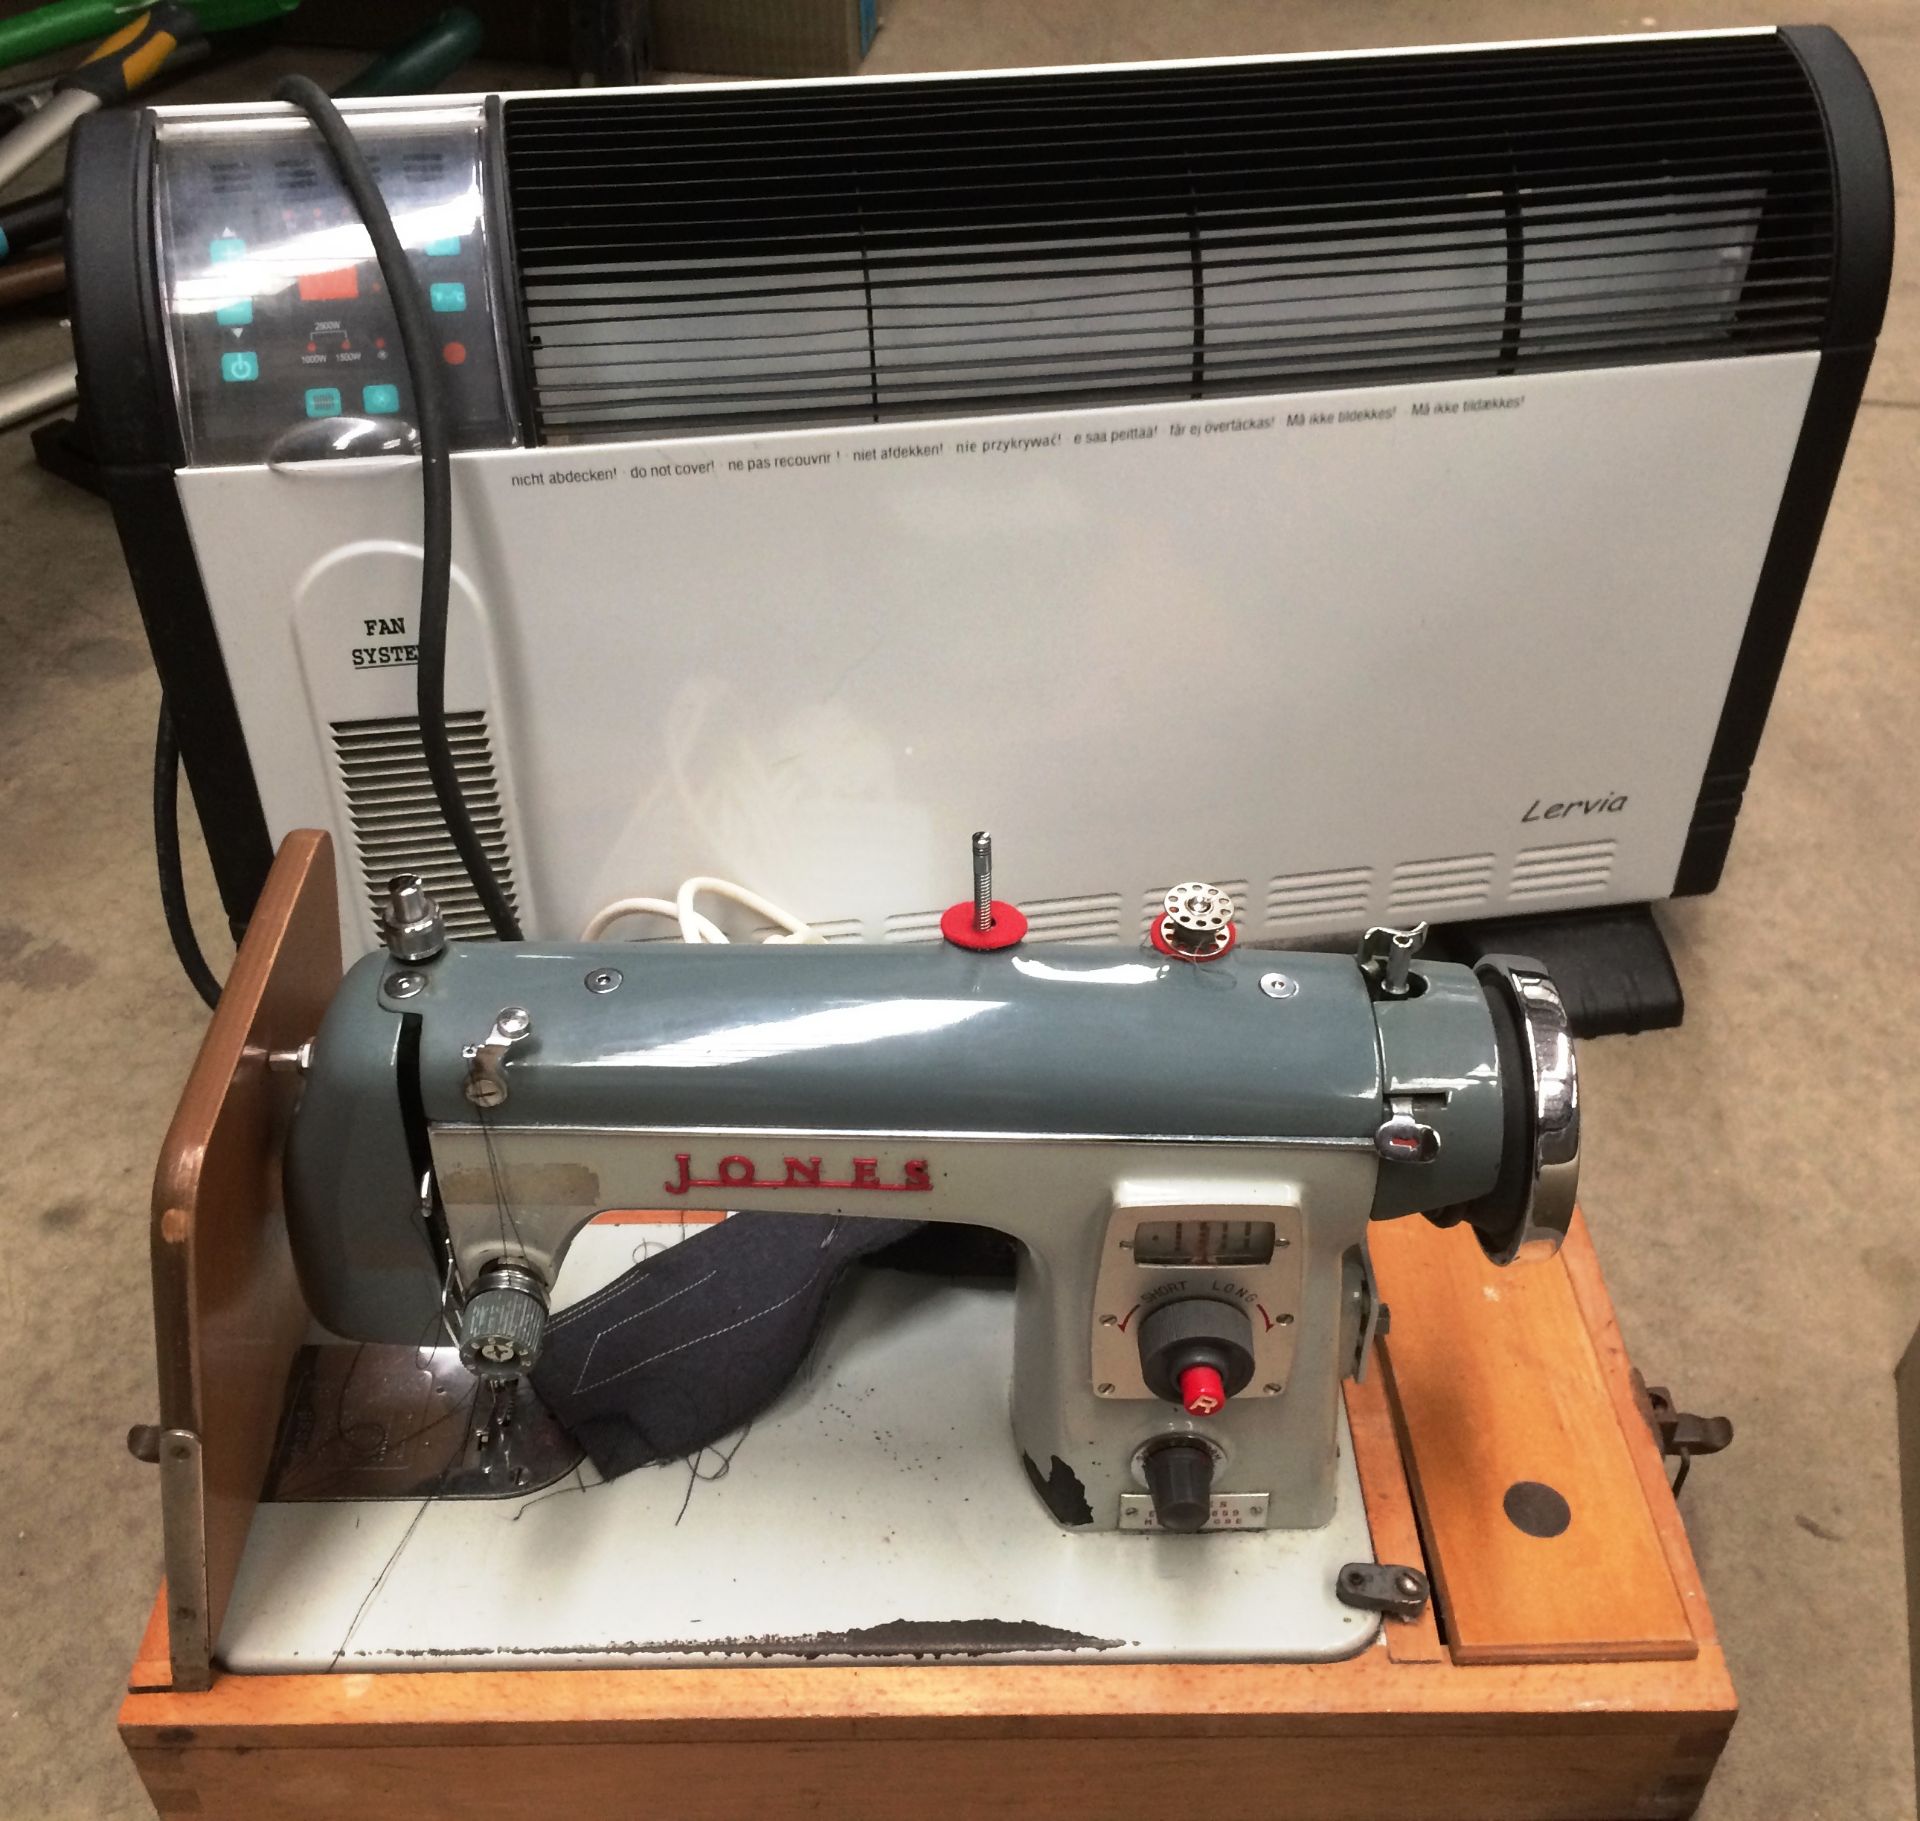 Jones CBE 240v sewing machine and a Lervia fan system heater - 240v